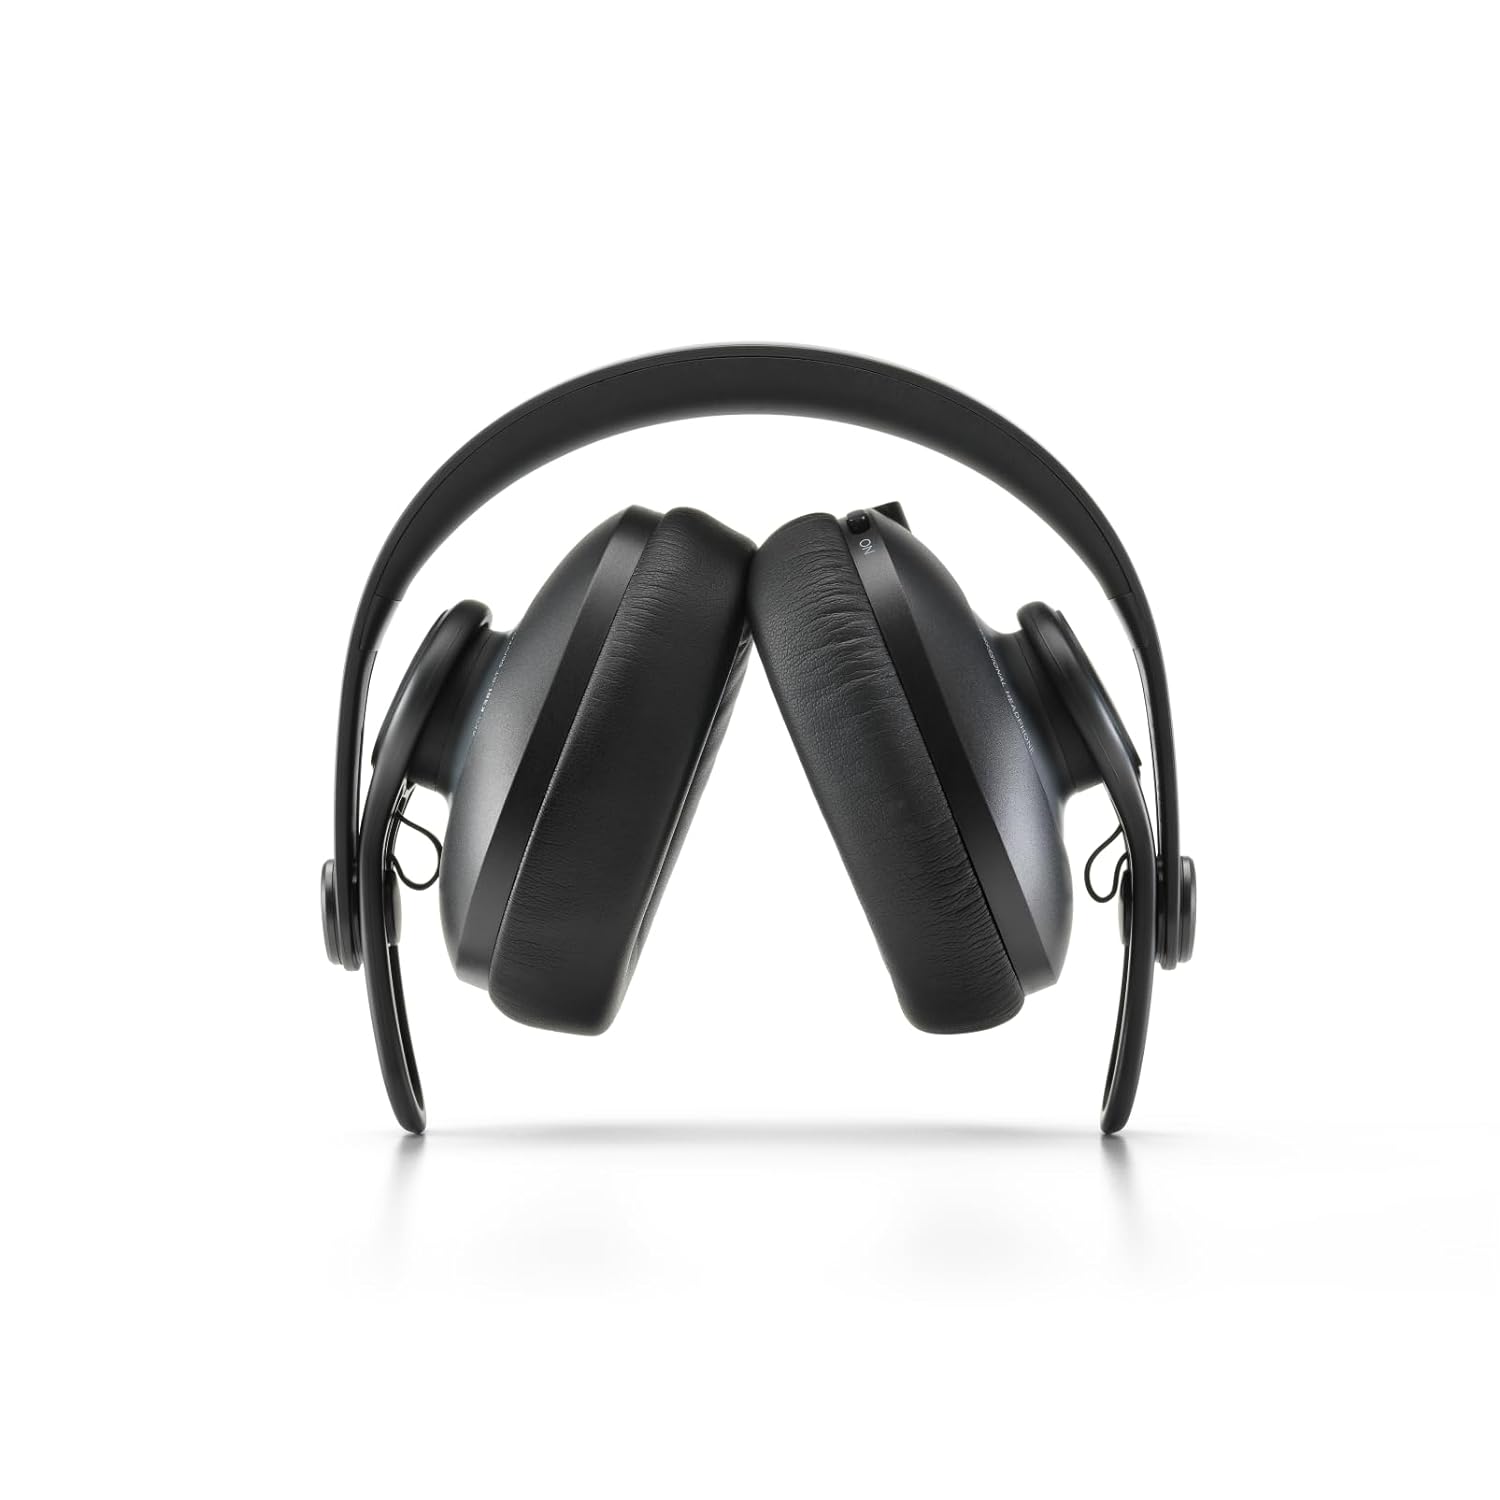 (Open Box) AKG K361BT Bluetooth Wireless Over Ear Headphones with Mic (Black) (Grade - A+)